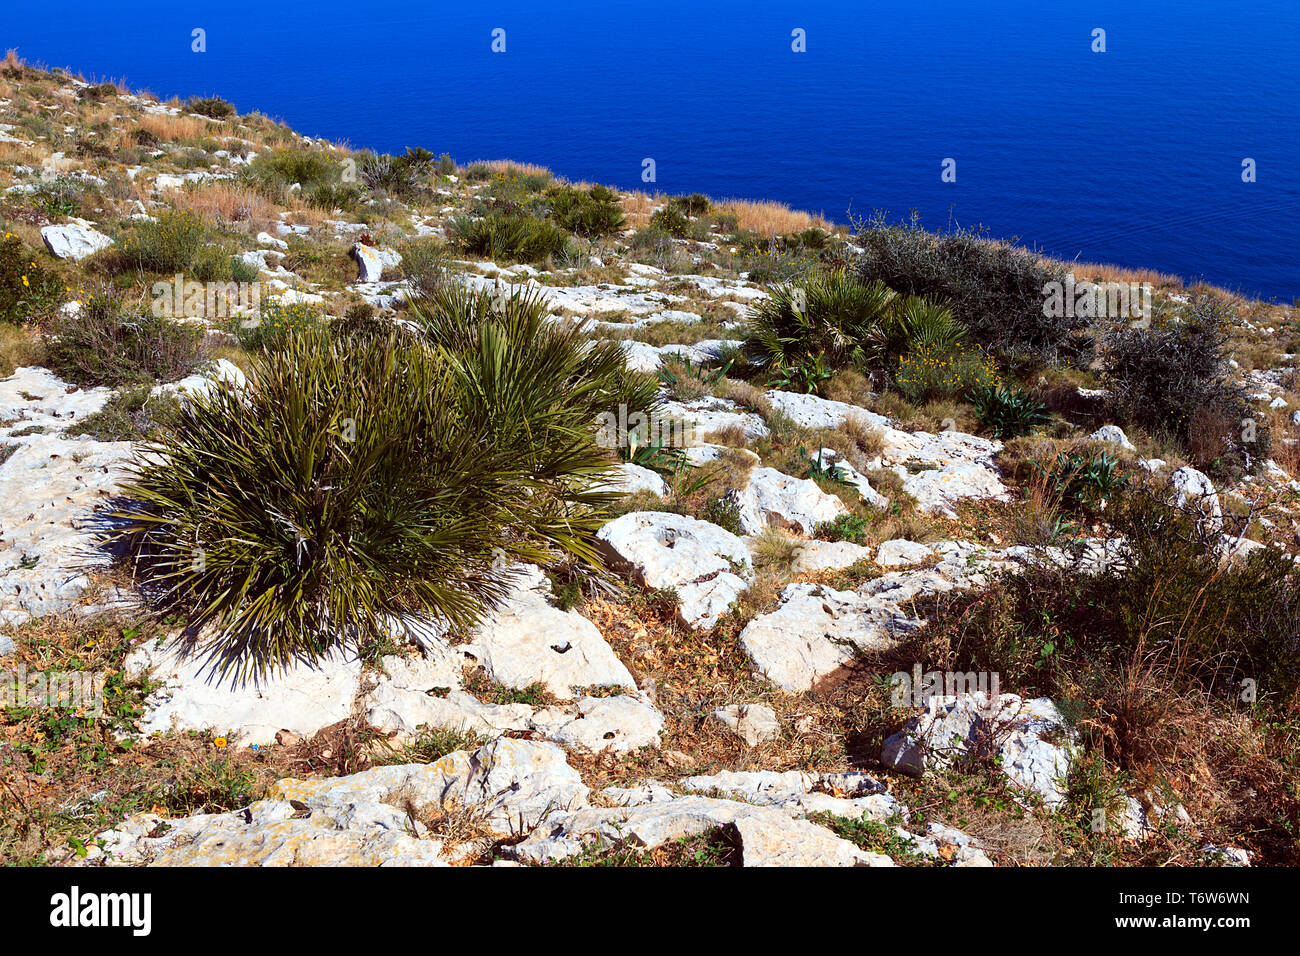 Flora growing amongst the rocks on top of the cliff at Cap Santa Antoni, Javea, Denia, Spain Stock Photo